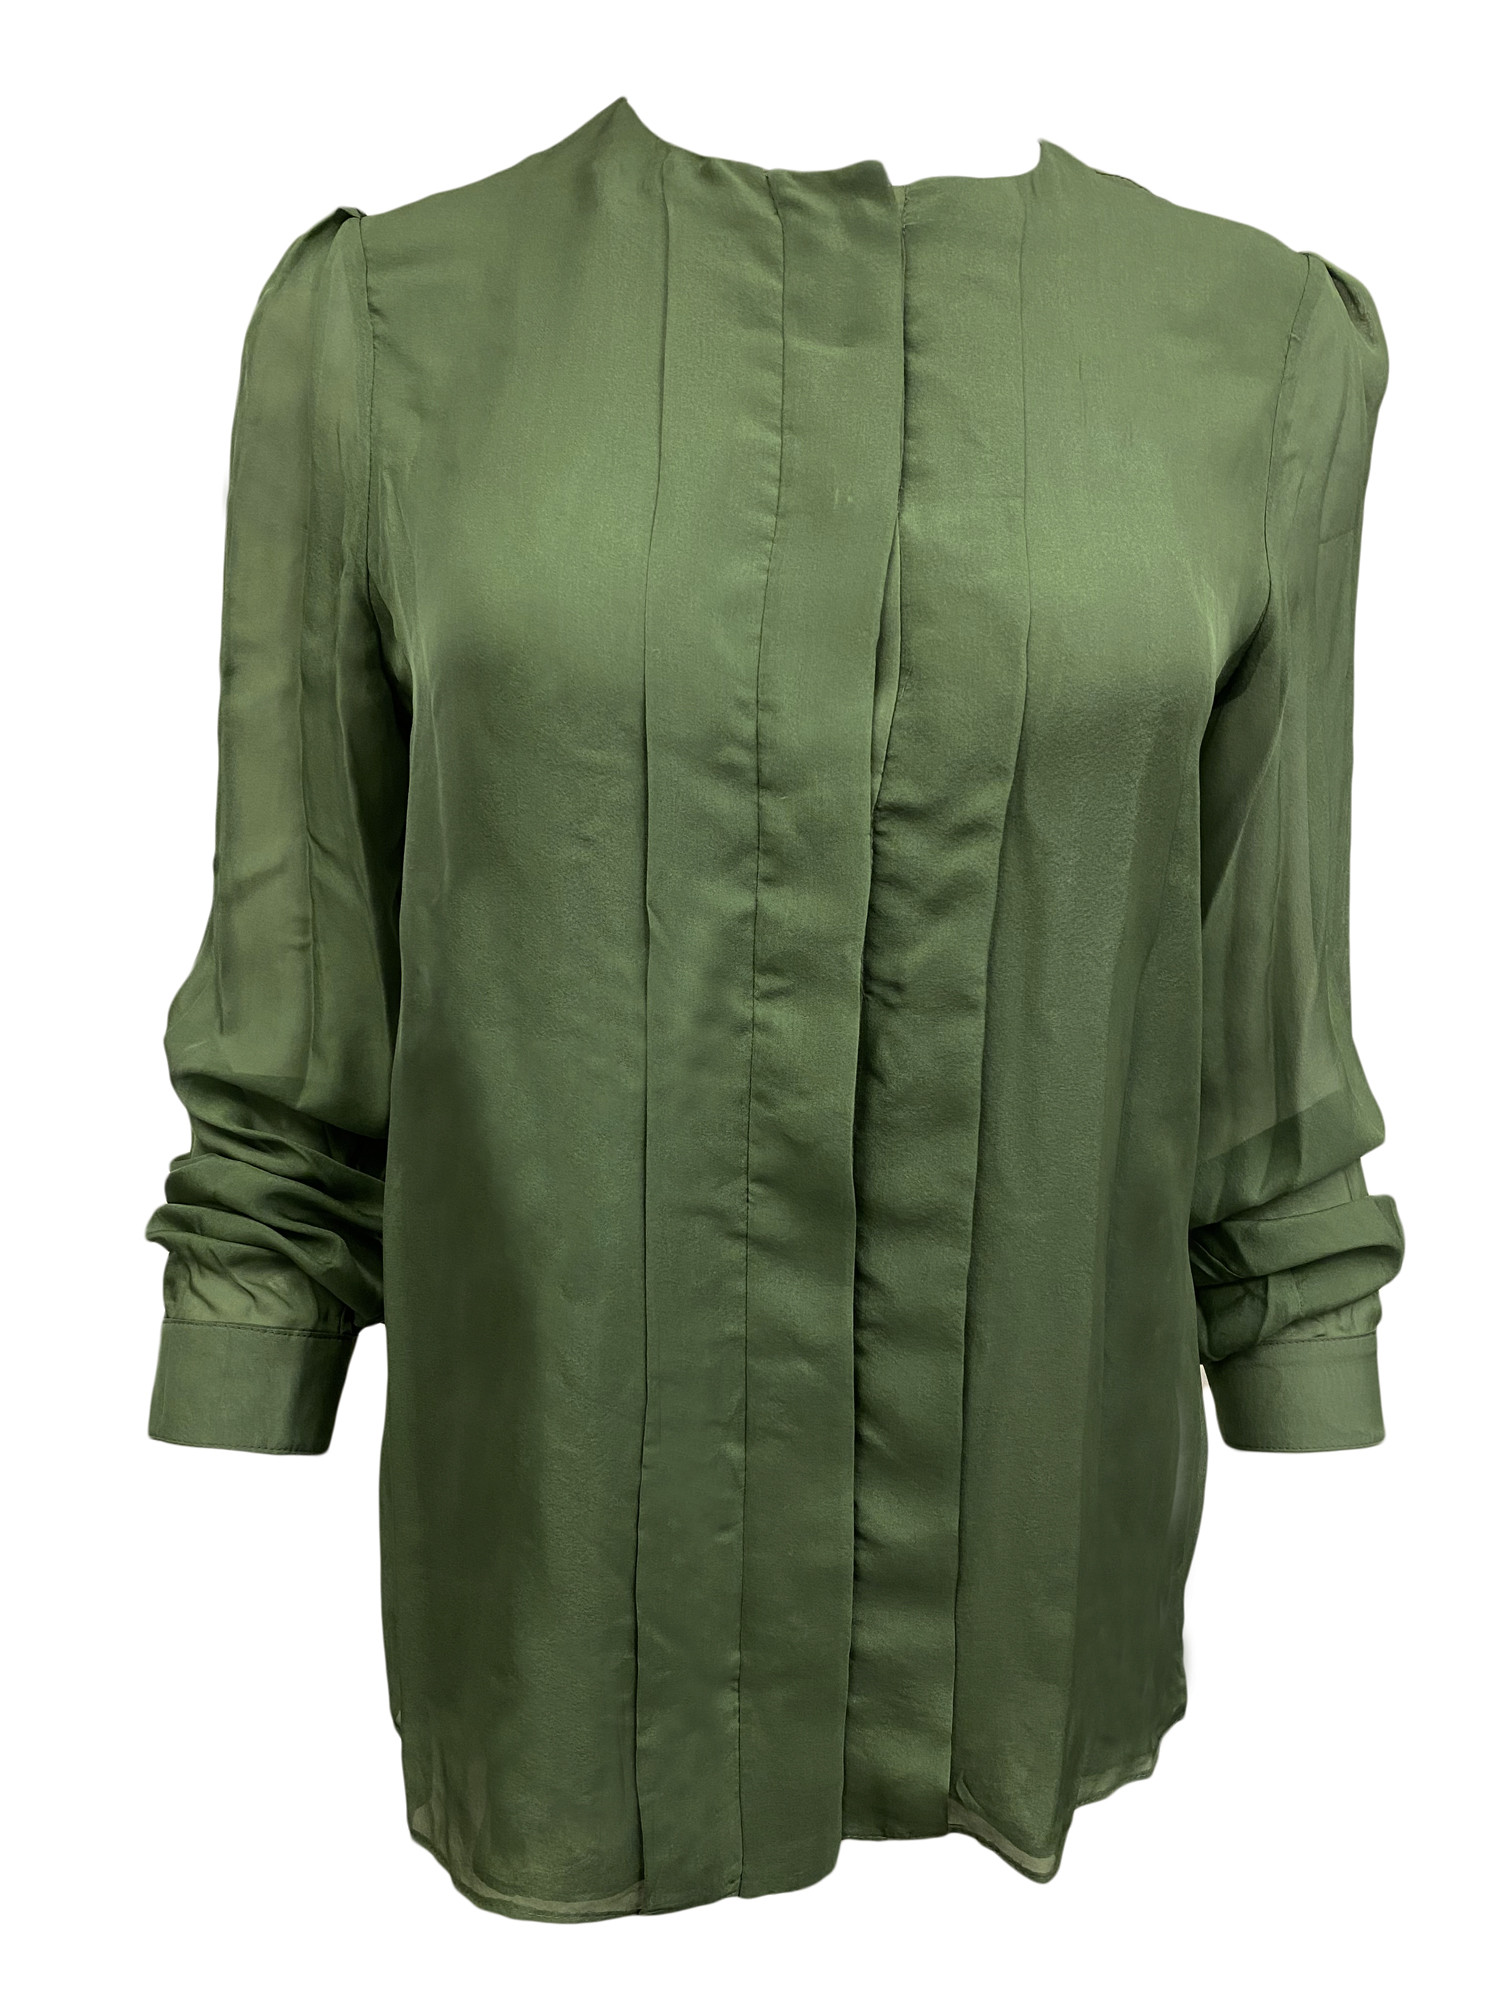 HANLEY MELLON Women's Army Green Collarless Military Blouse $425 NEW | eBay